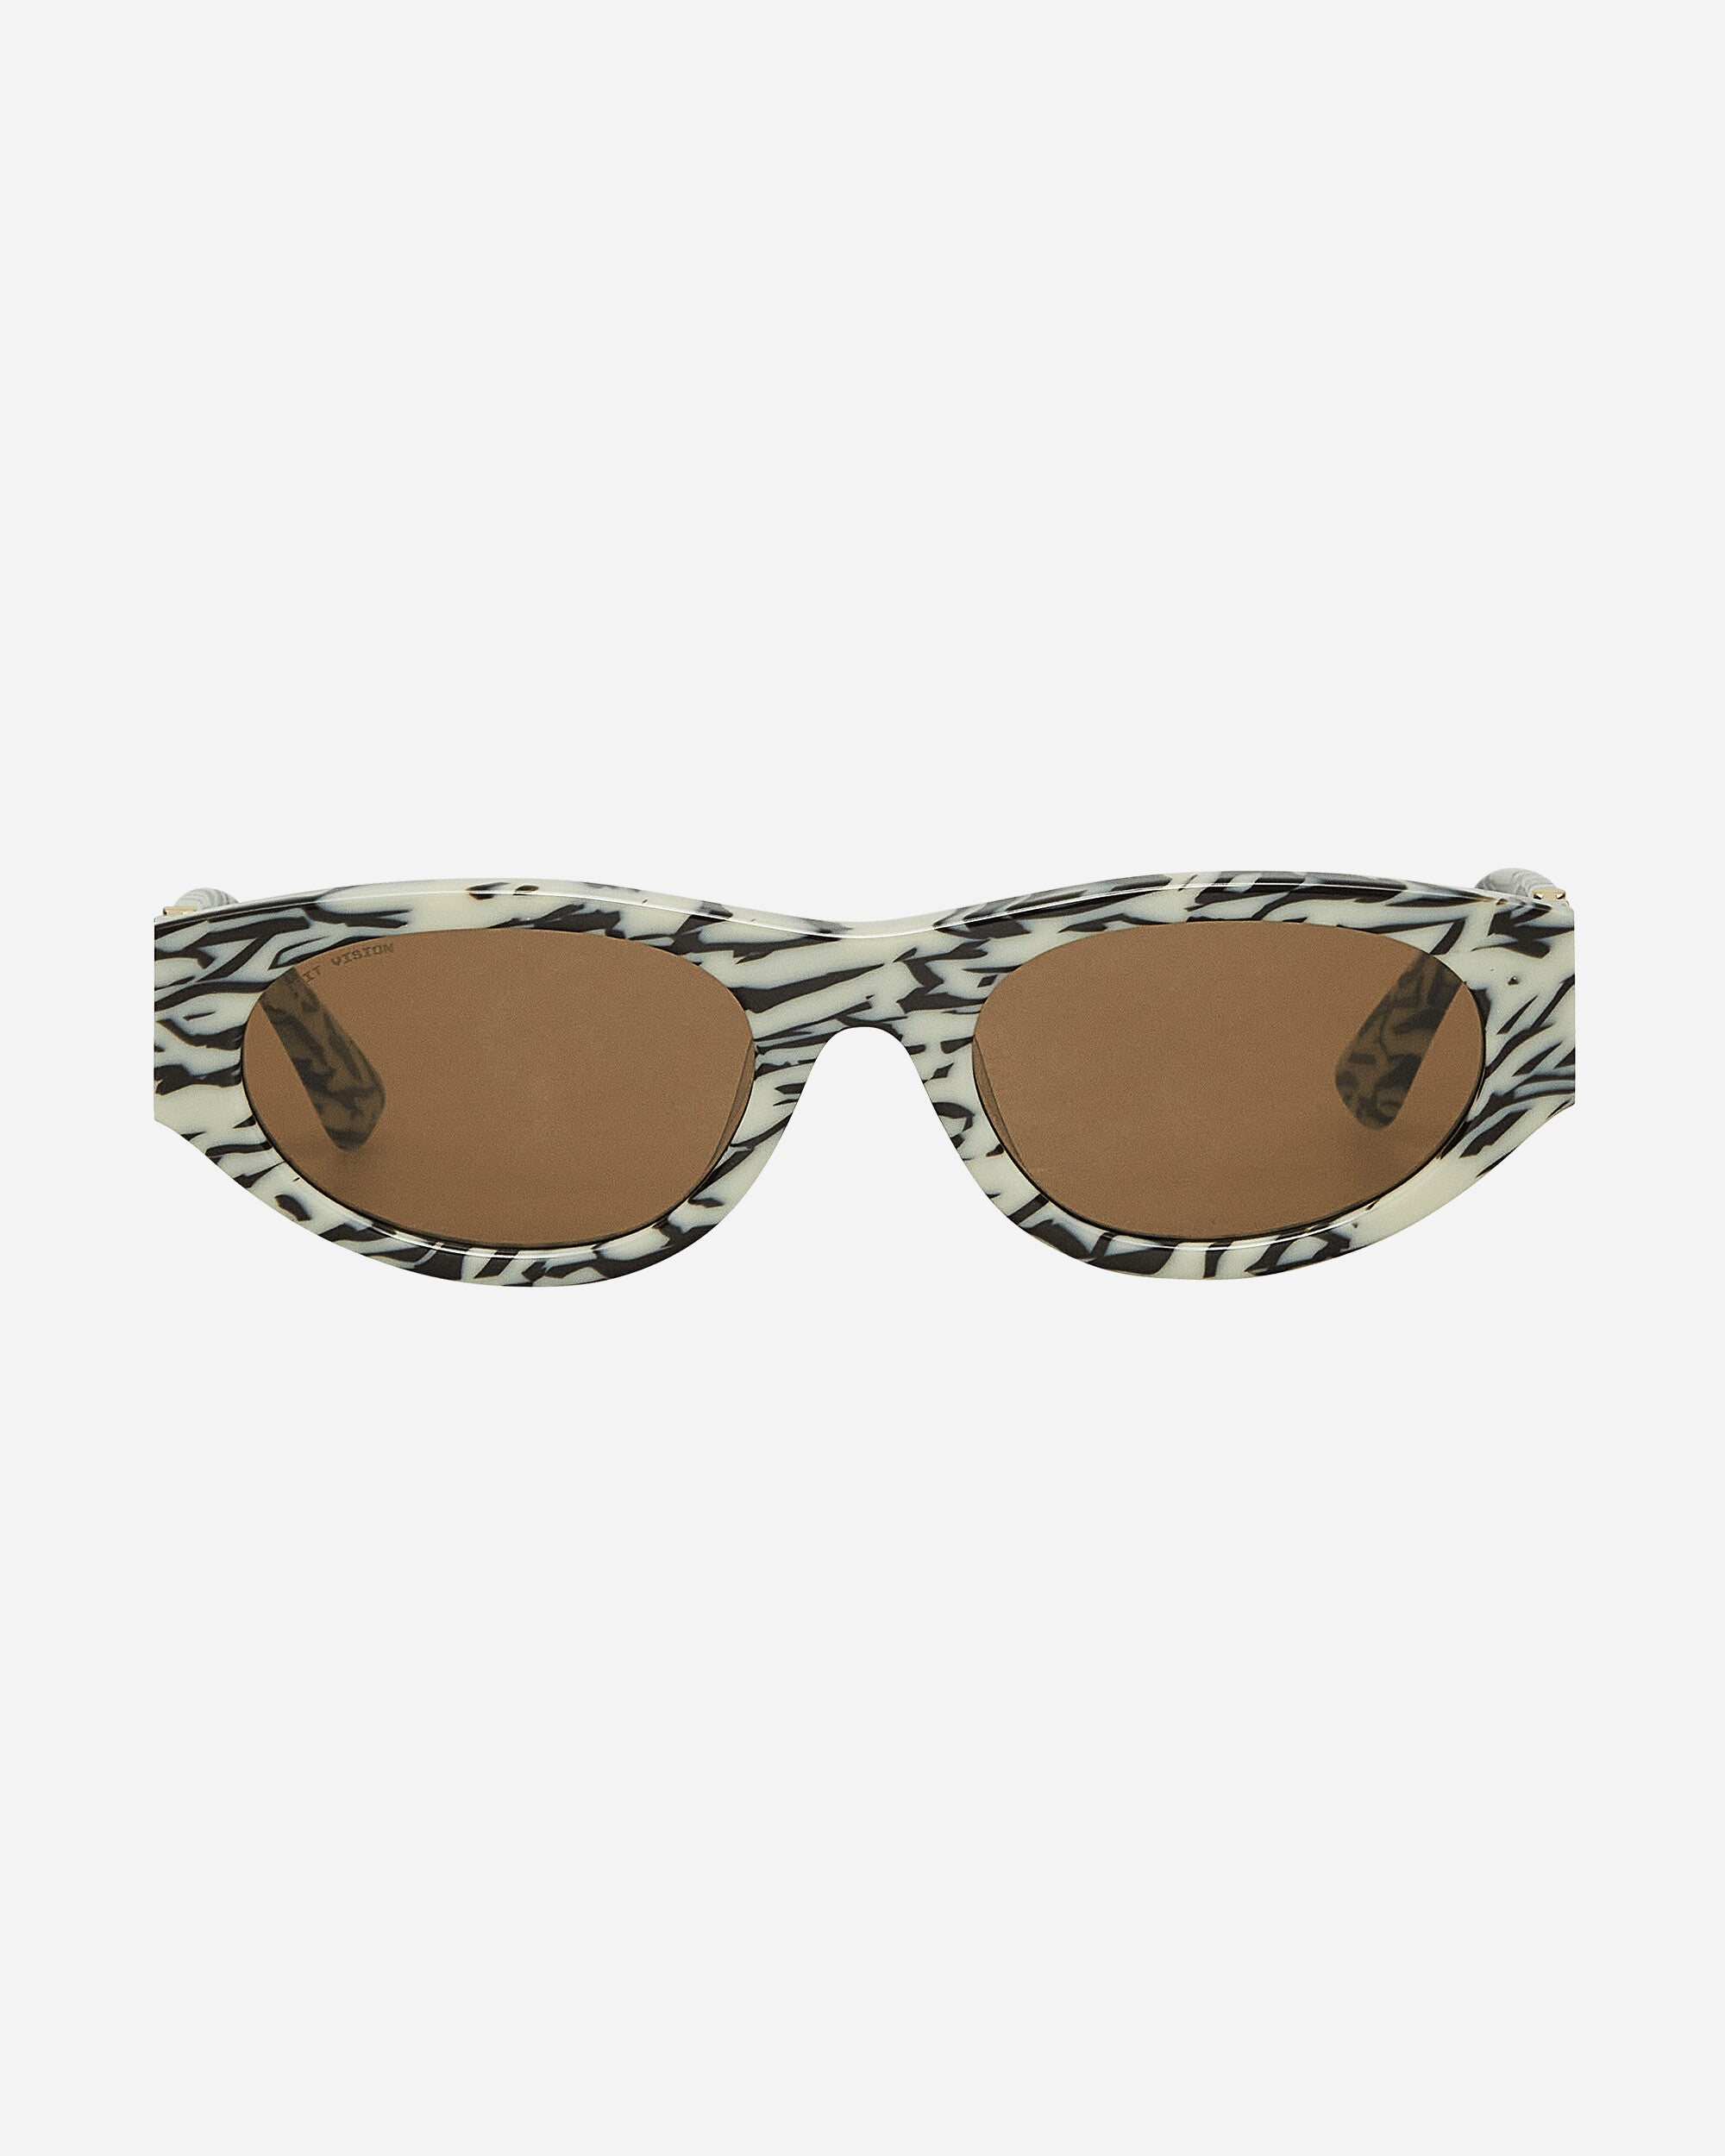 AKILA Vertigo X Freddie Gibbs Zebra Eyewear Sunglasses 210315 94FG